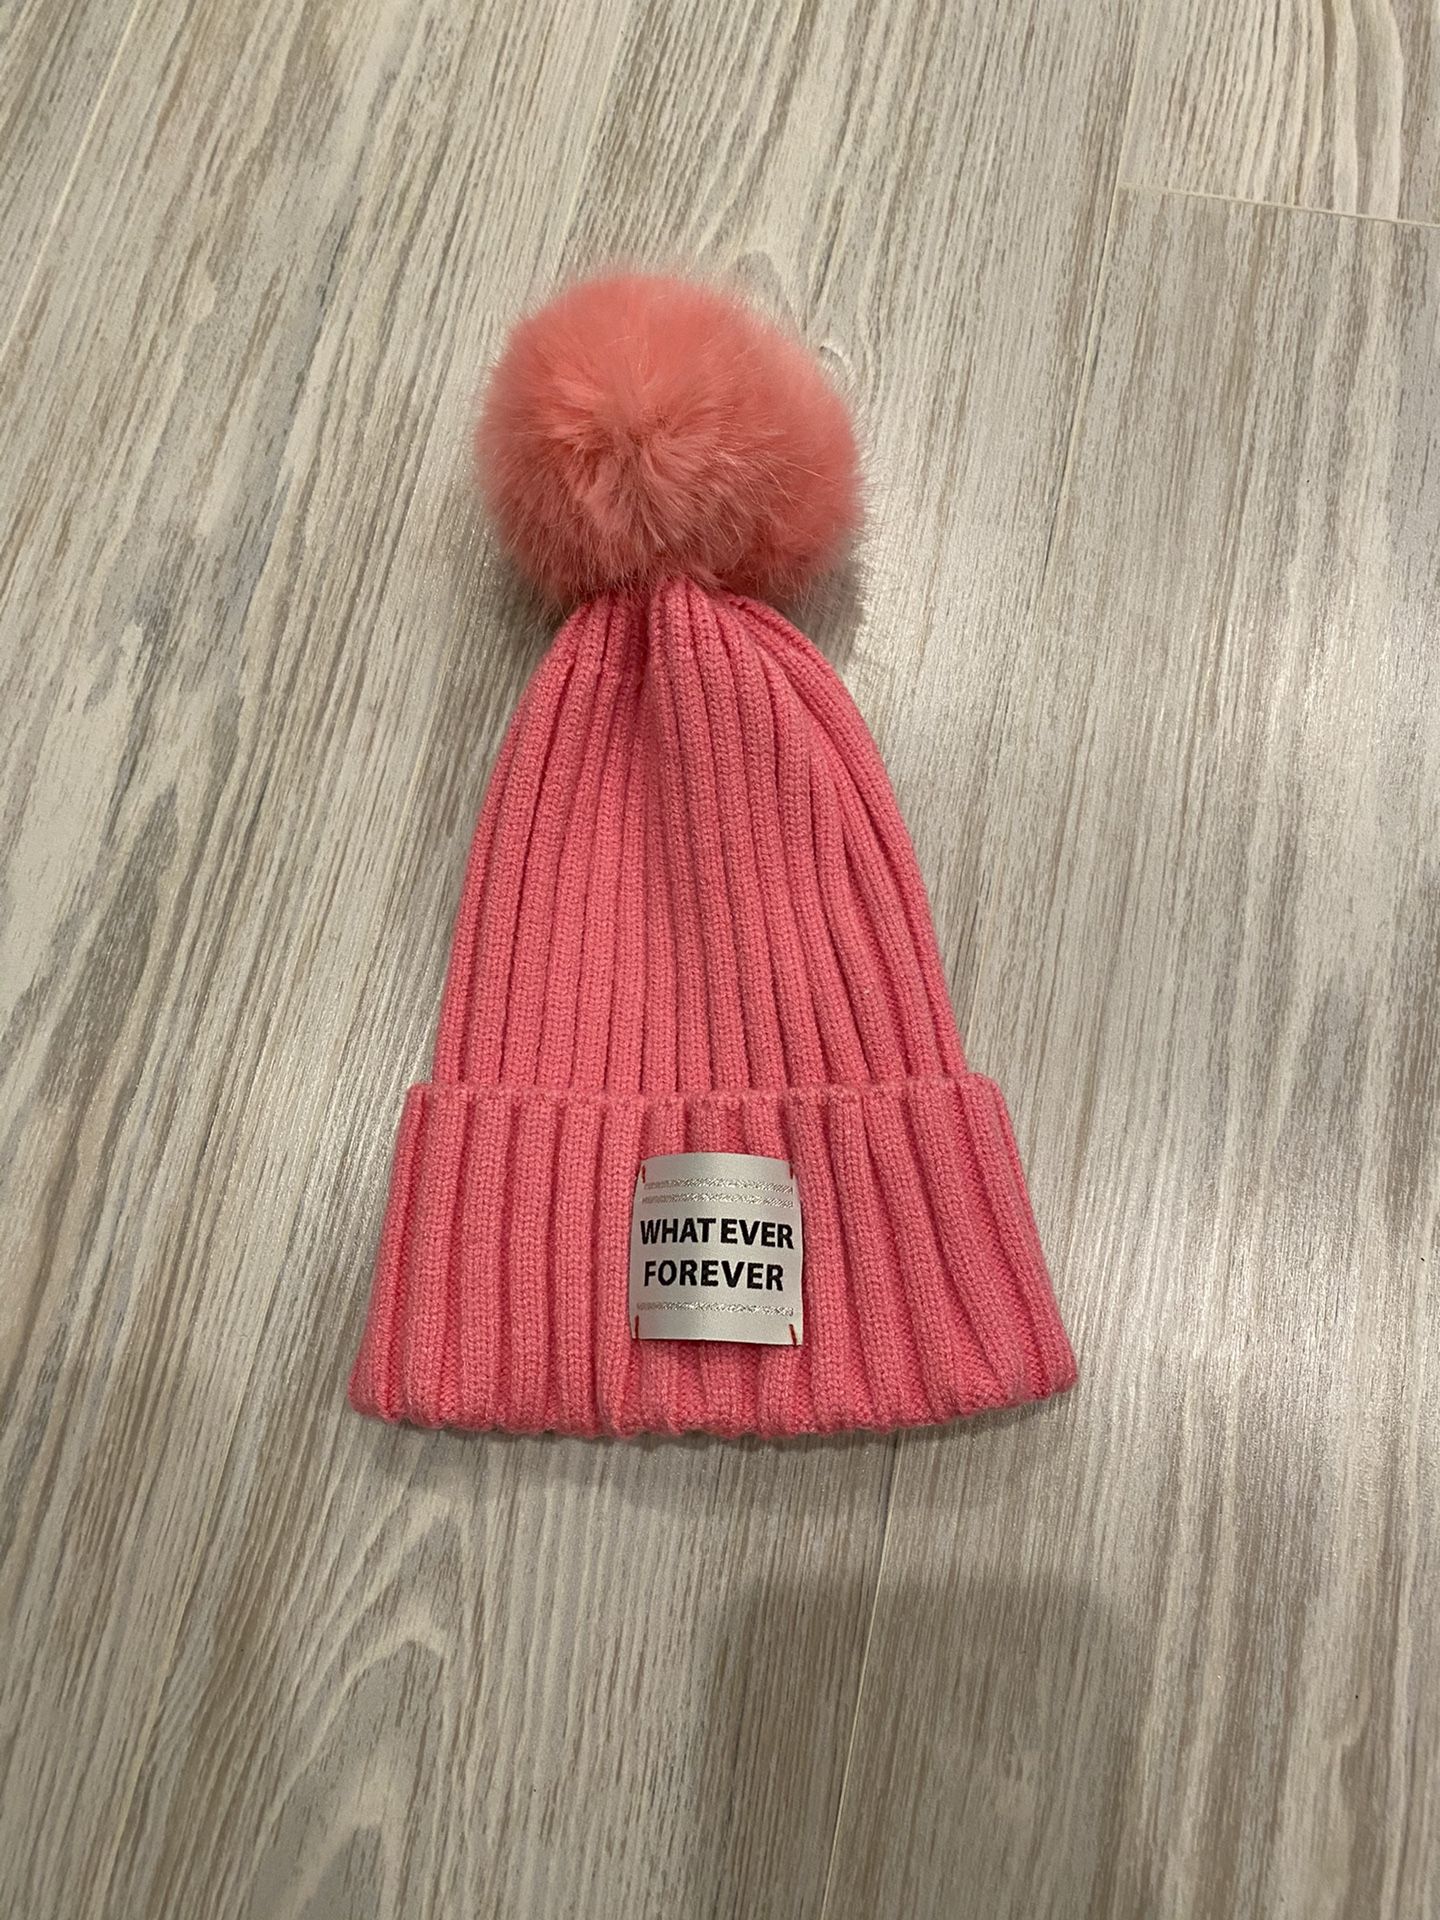 H&M hot pink fuzzy pompom beanie hat cap